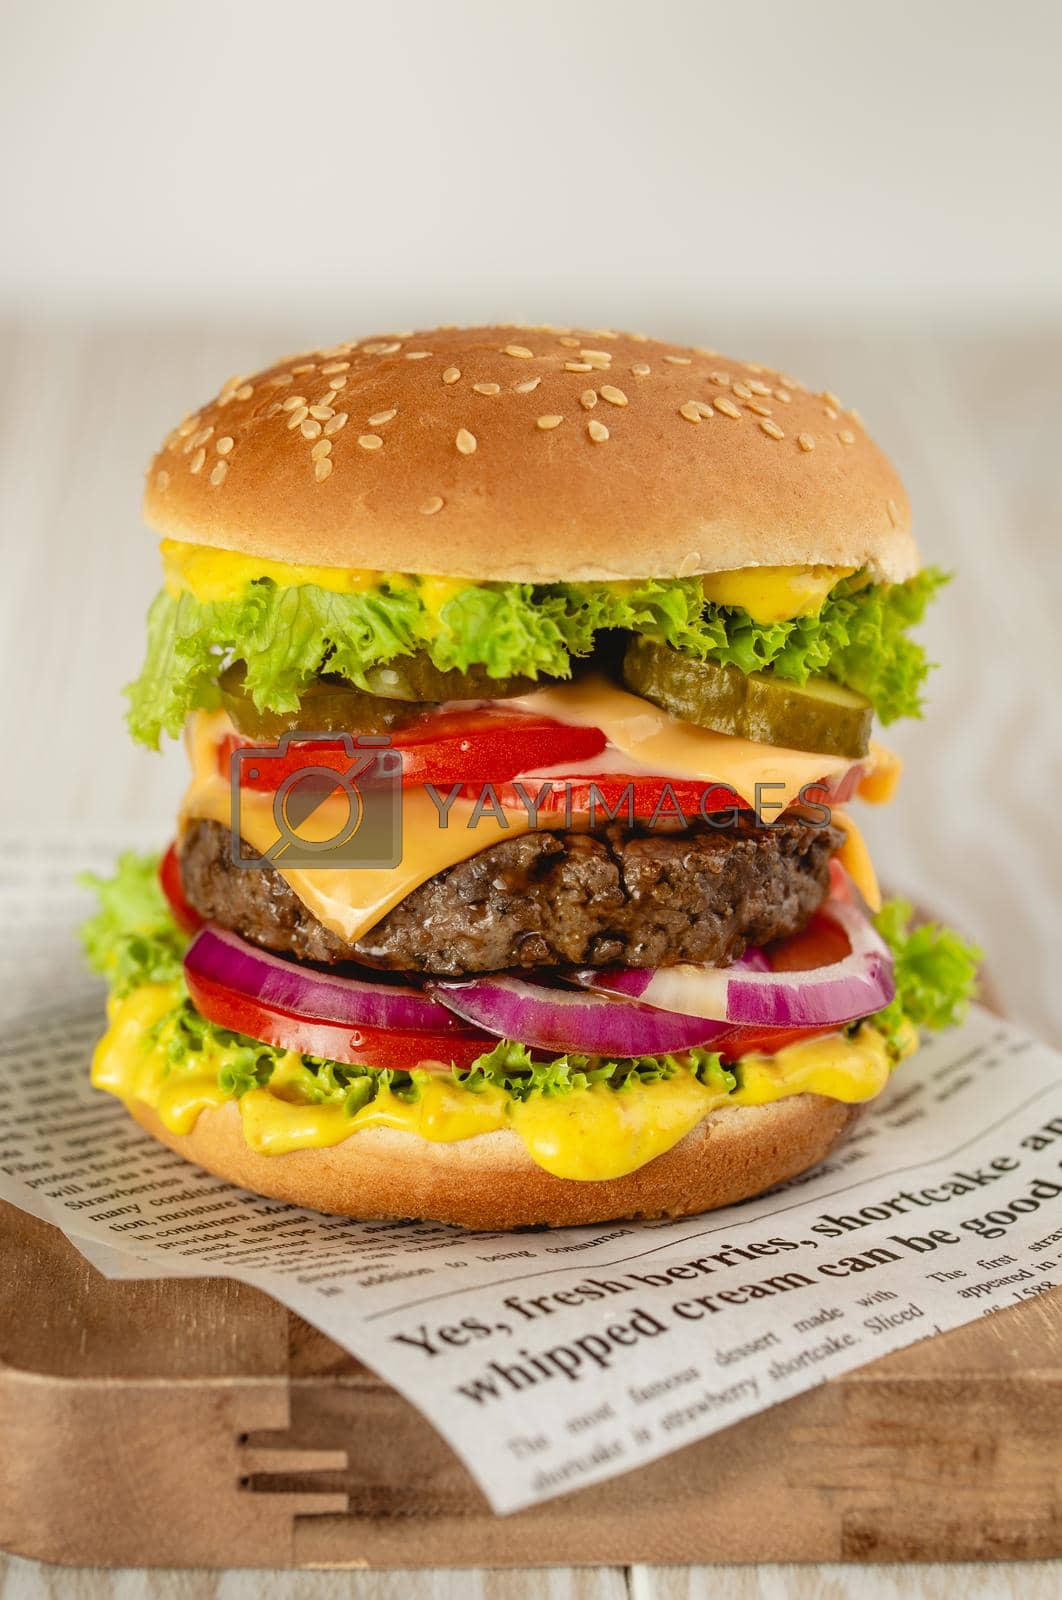 Royalty free image of Fresh tasty burger by its_al_dente